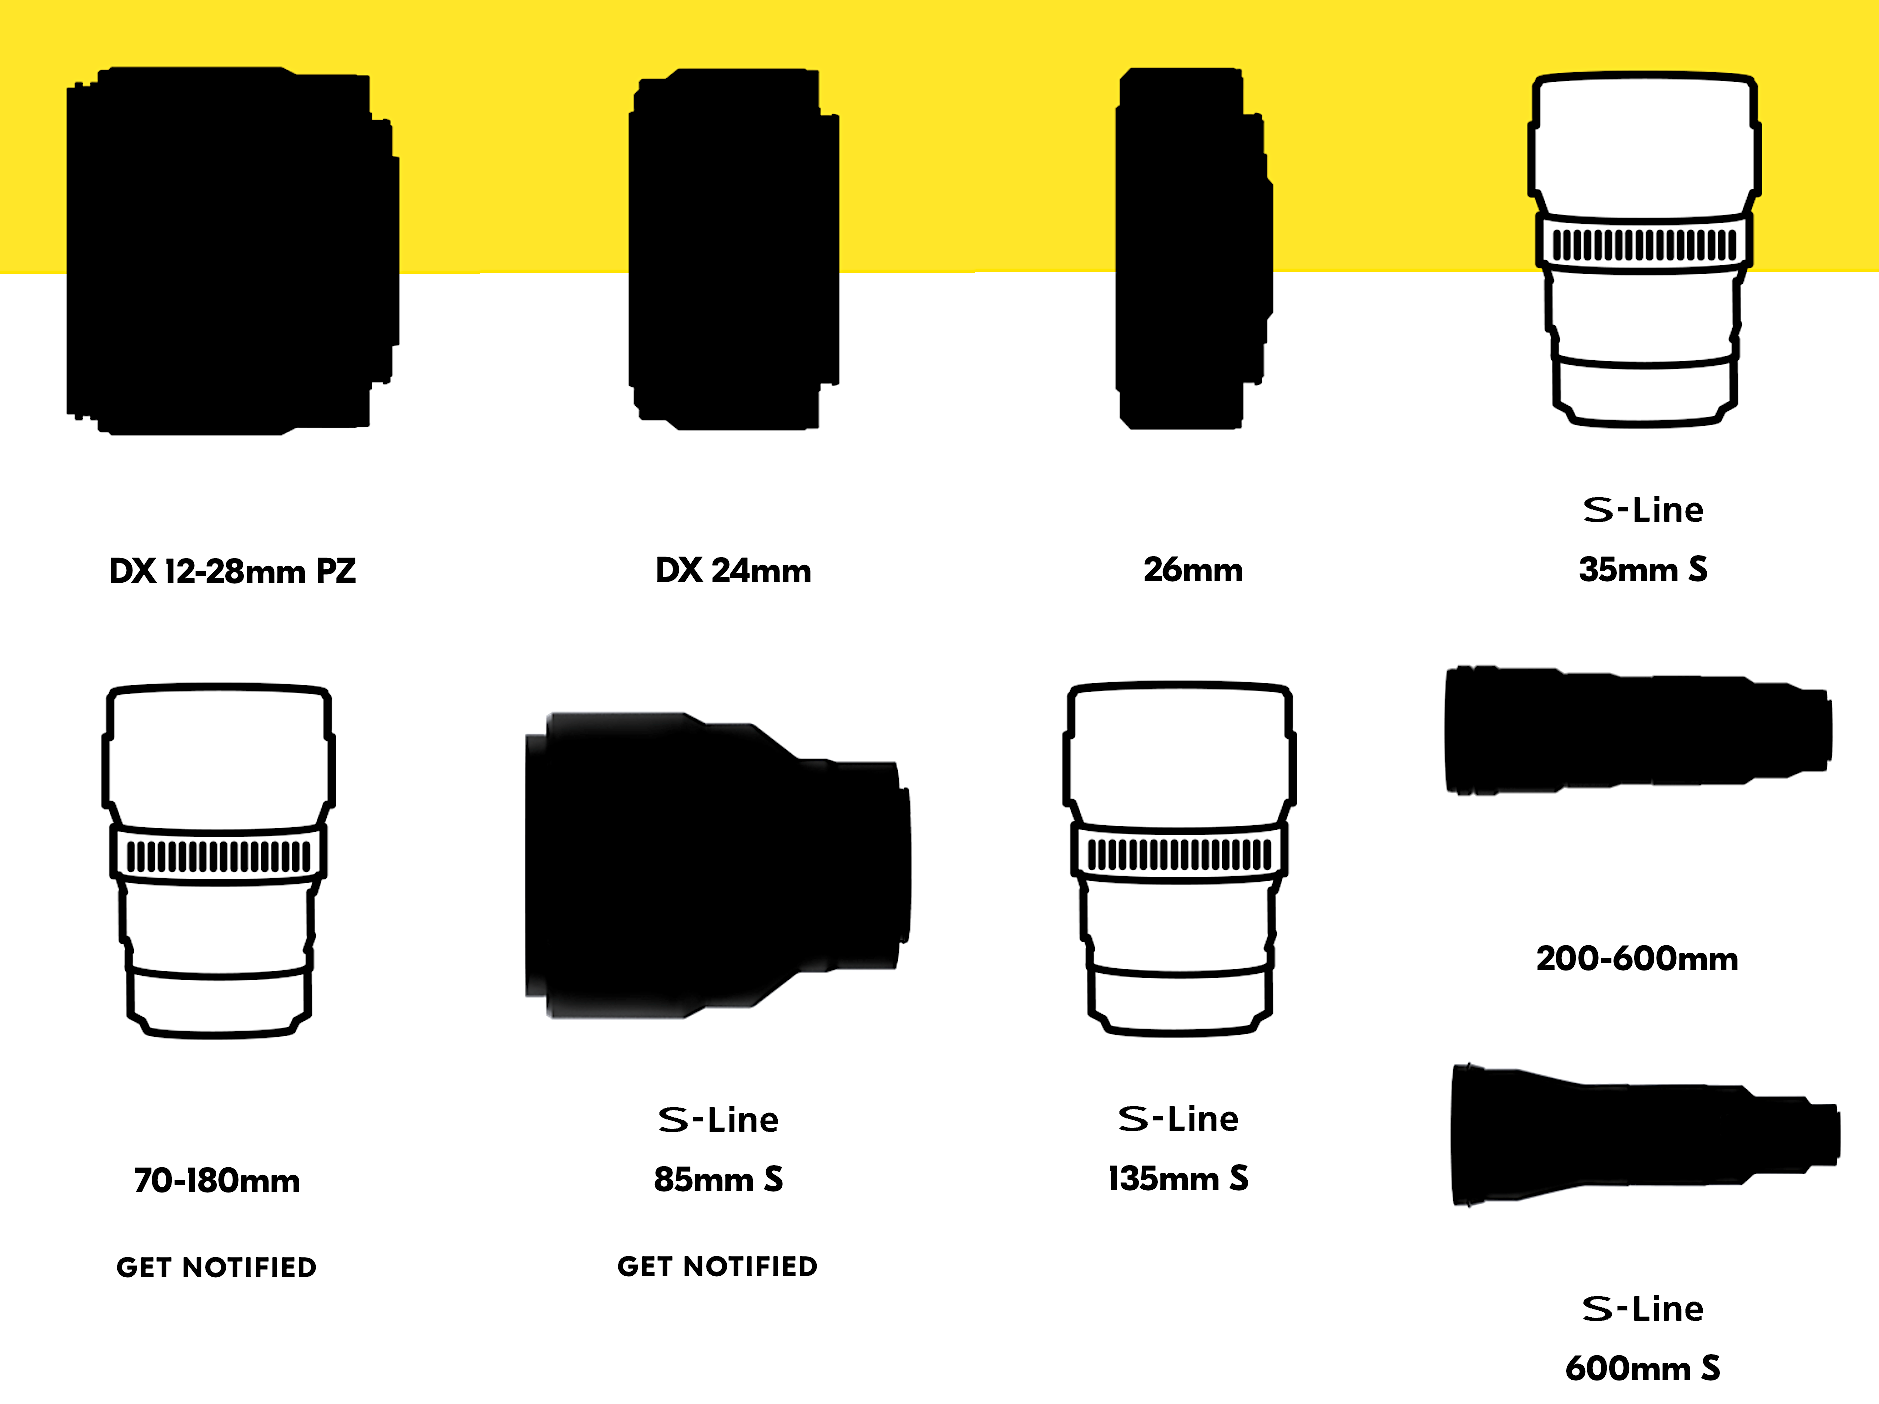 The next Nikkor Z 35mm S-line lens will be f/1.2 (plus new drawings of upcoming lenses) - Nikon Rumors